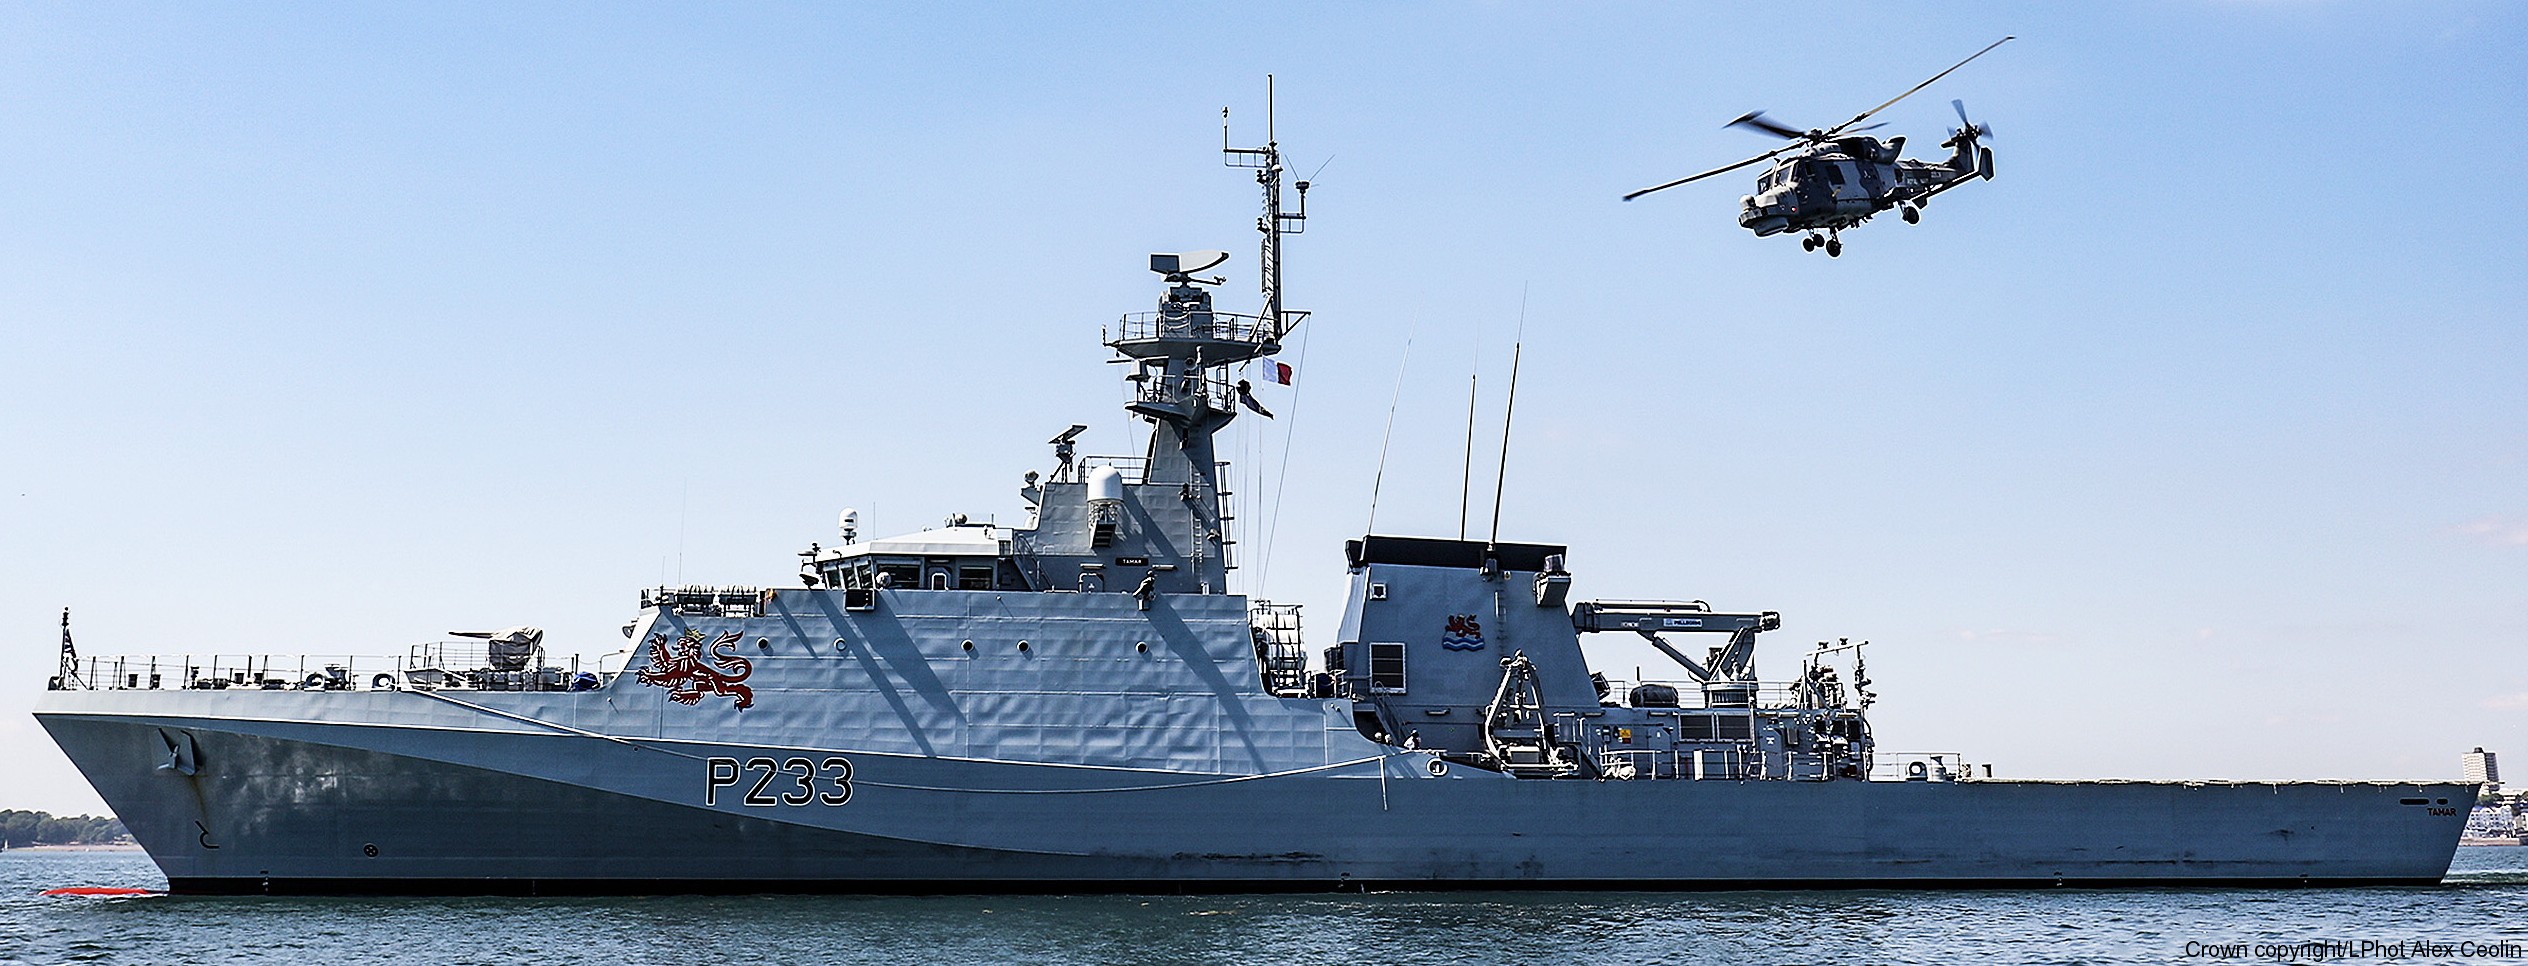 p233 hms tamar river class offshore patrol vessel opv royal navy 31 flight operations